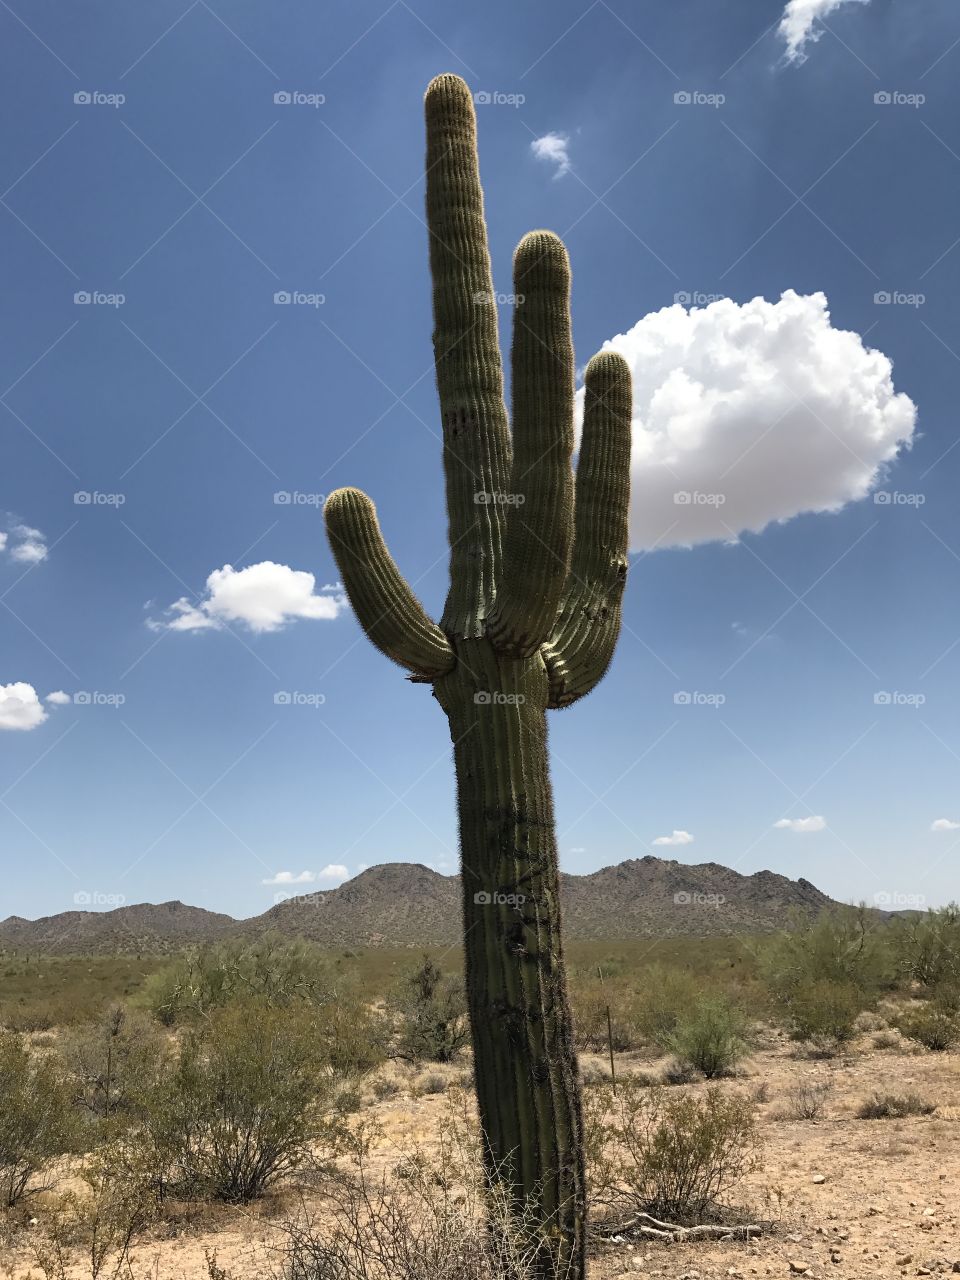 Lonely cactus standing sentinel in the vivid Arizona desert. 